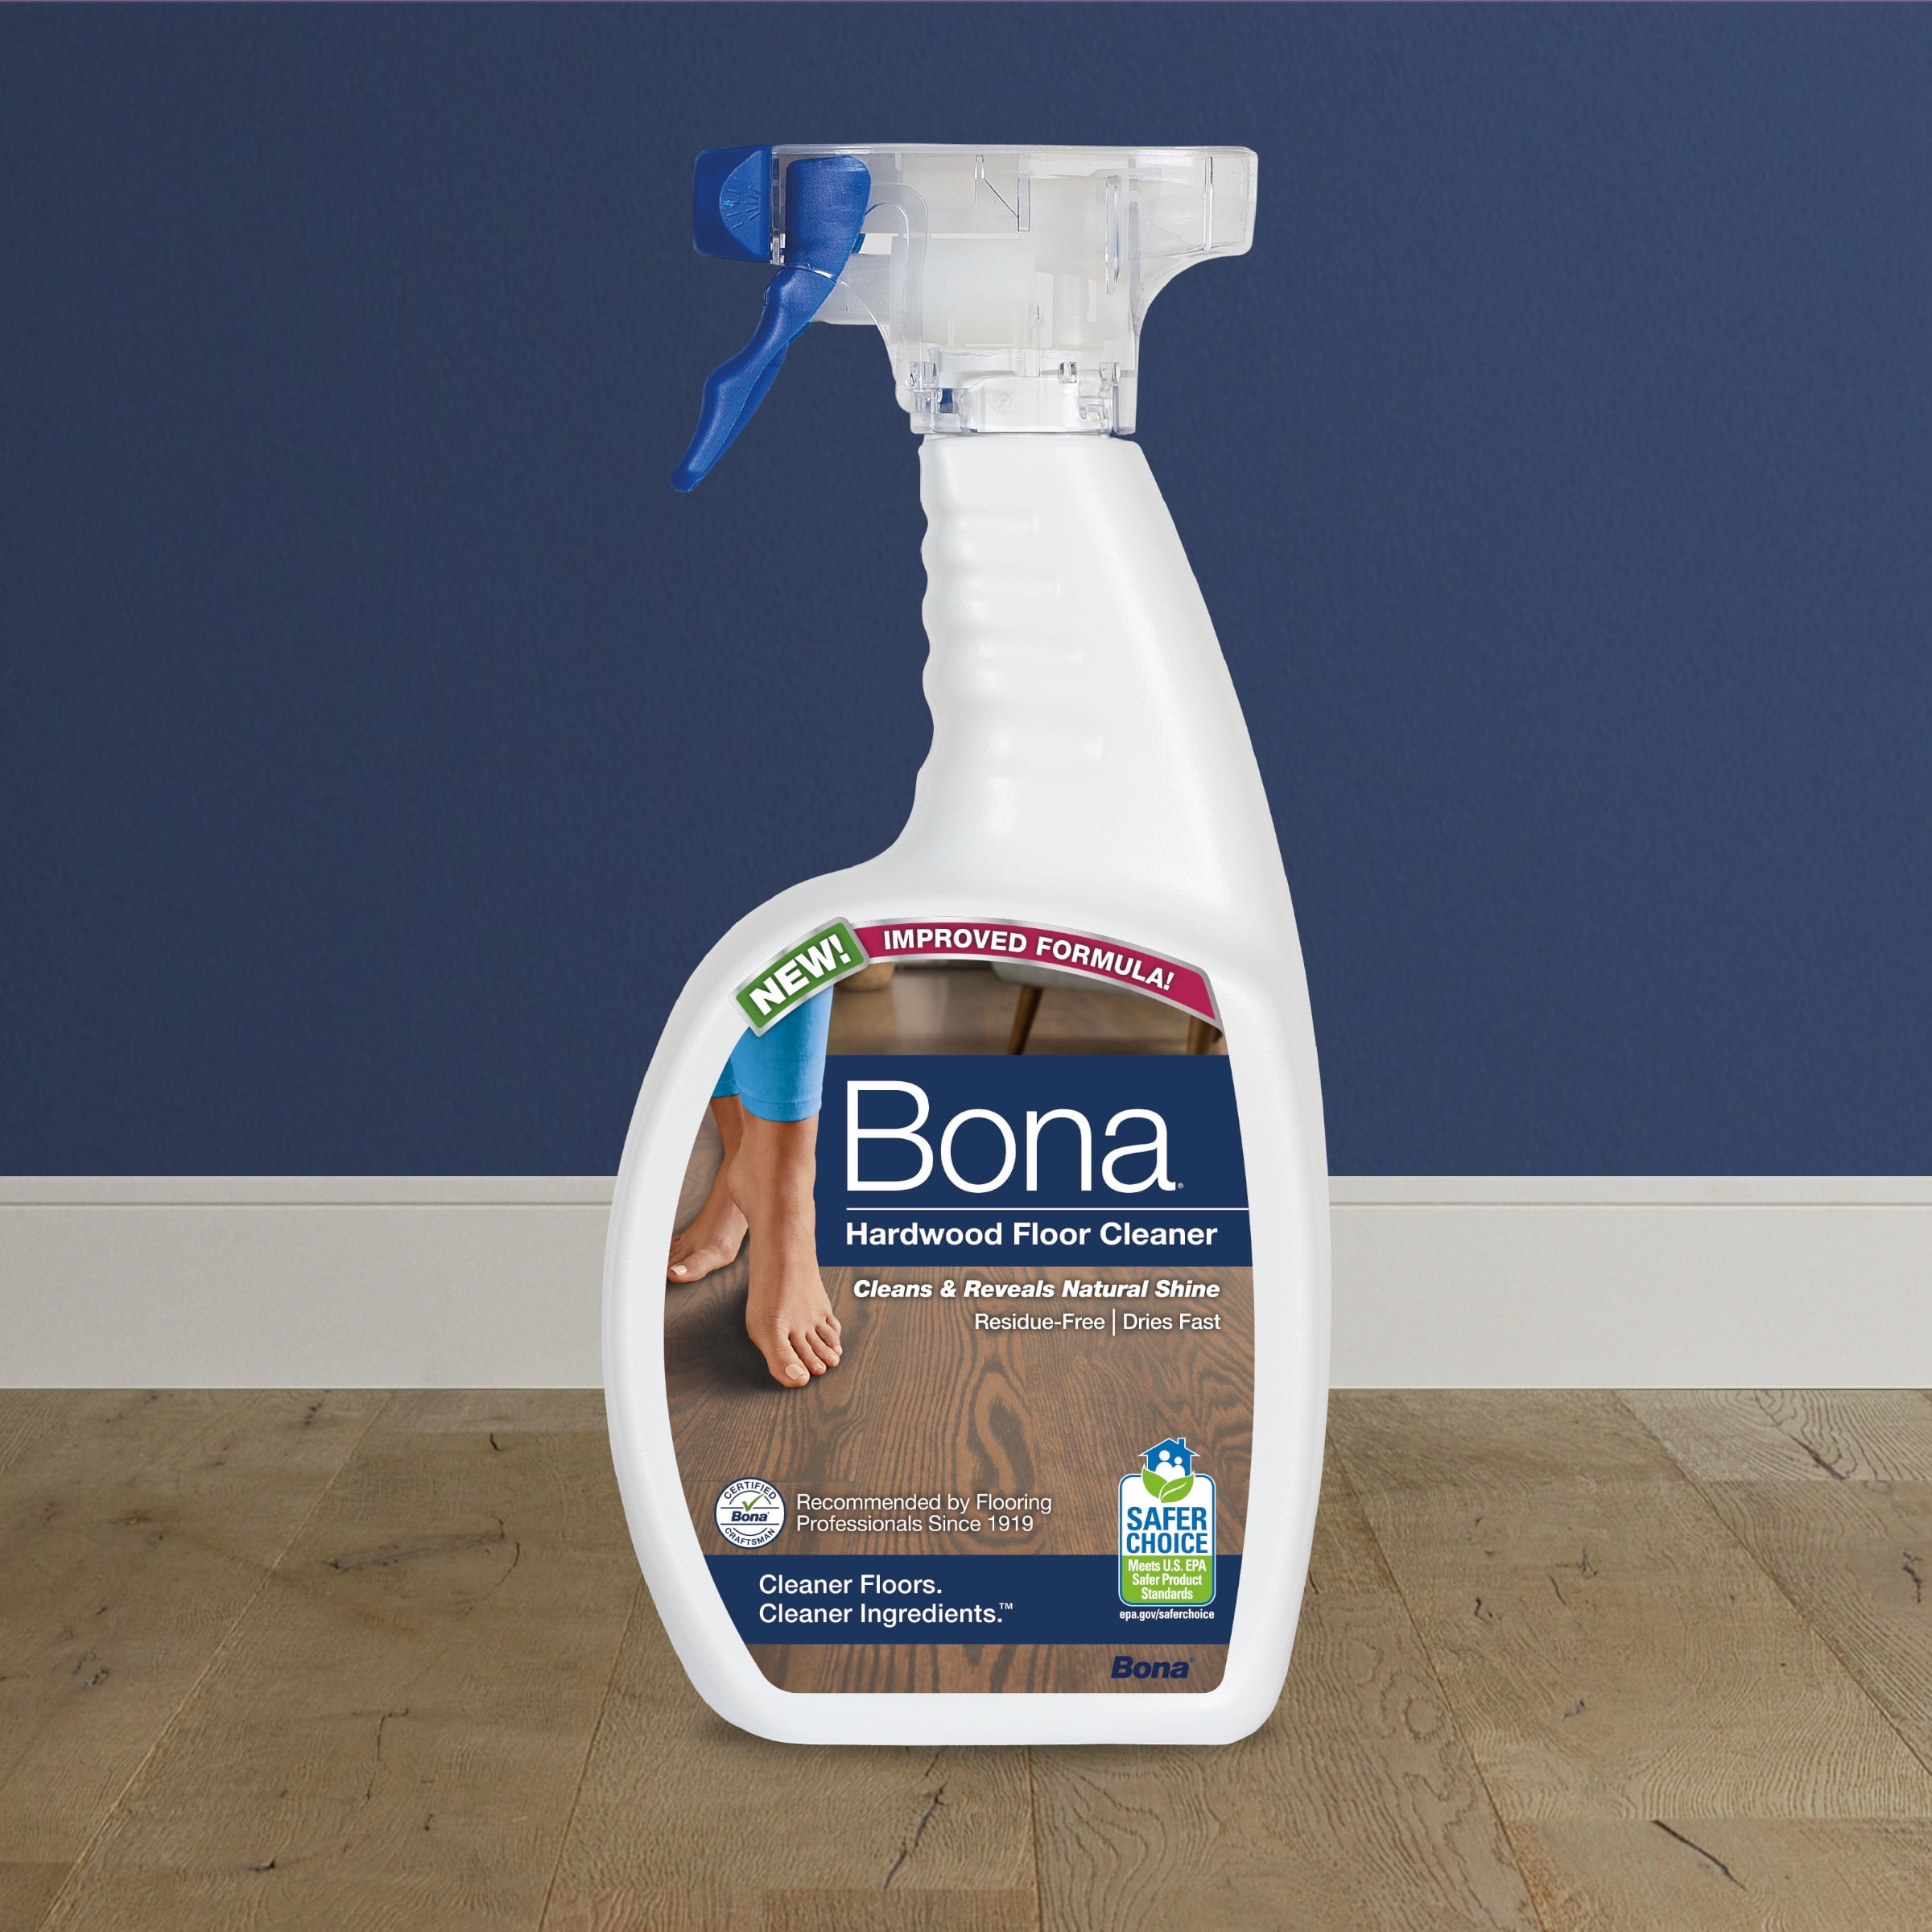 Bona Hardwood Floor Cleaner Spray 22 Fl, Is Bona Hardwood Floor Cleaner Safe For Laminate